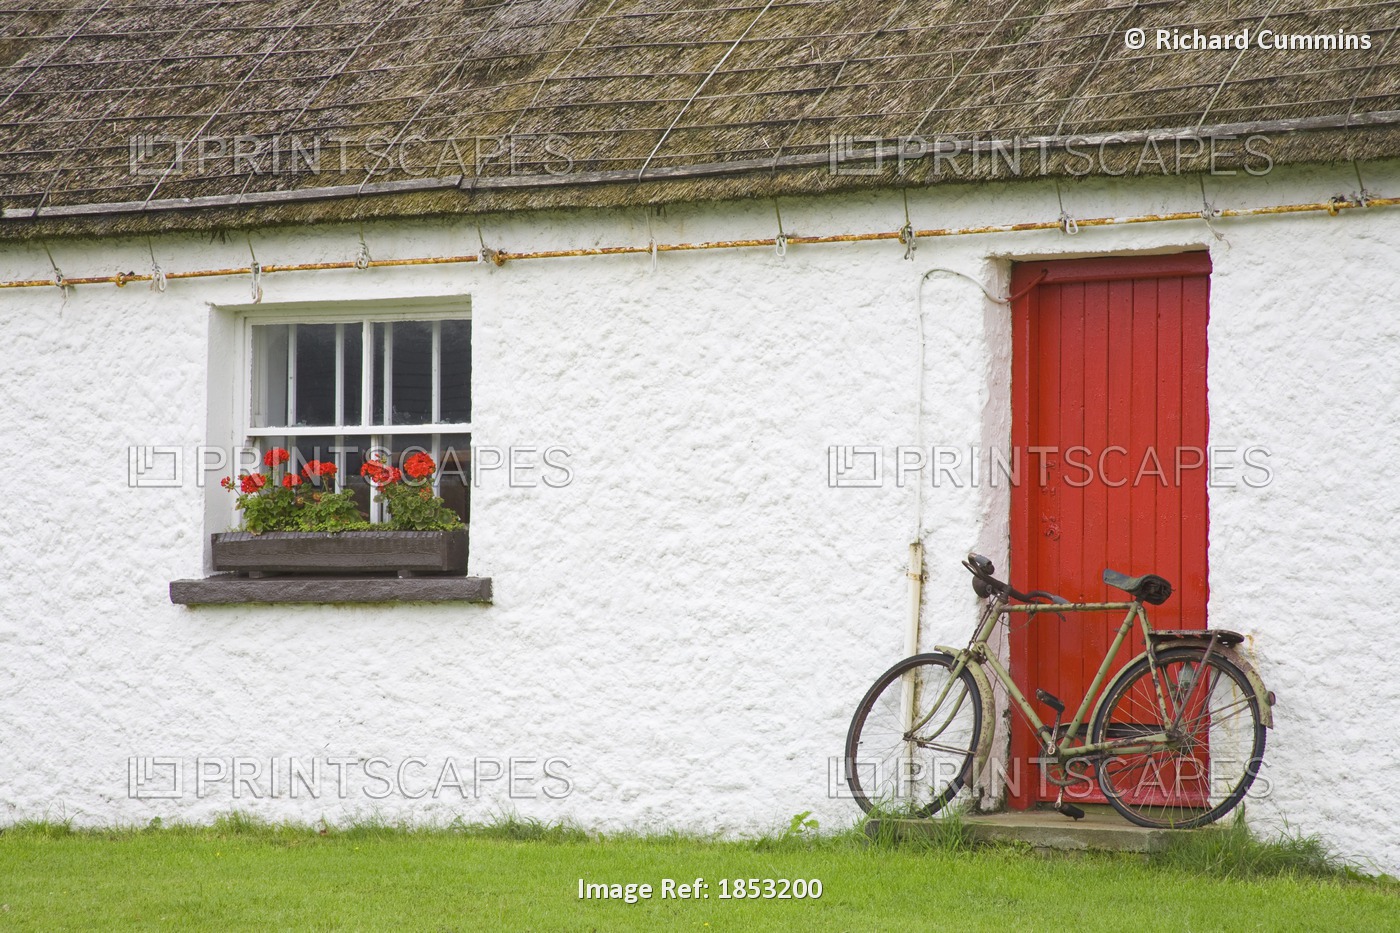 Folk Village Museum, Glencolmcille Village, County Donegal, Ireland